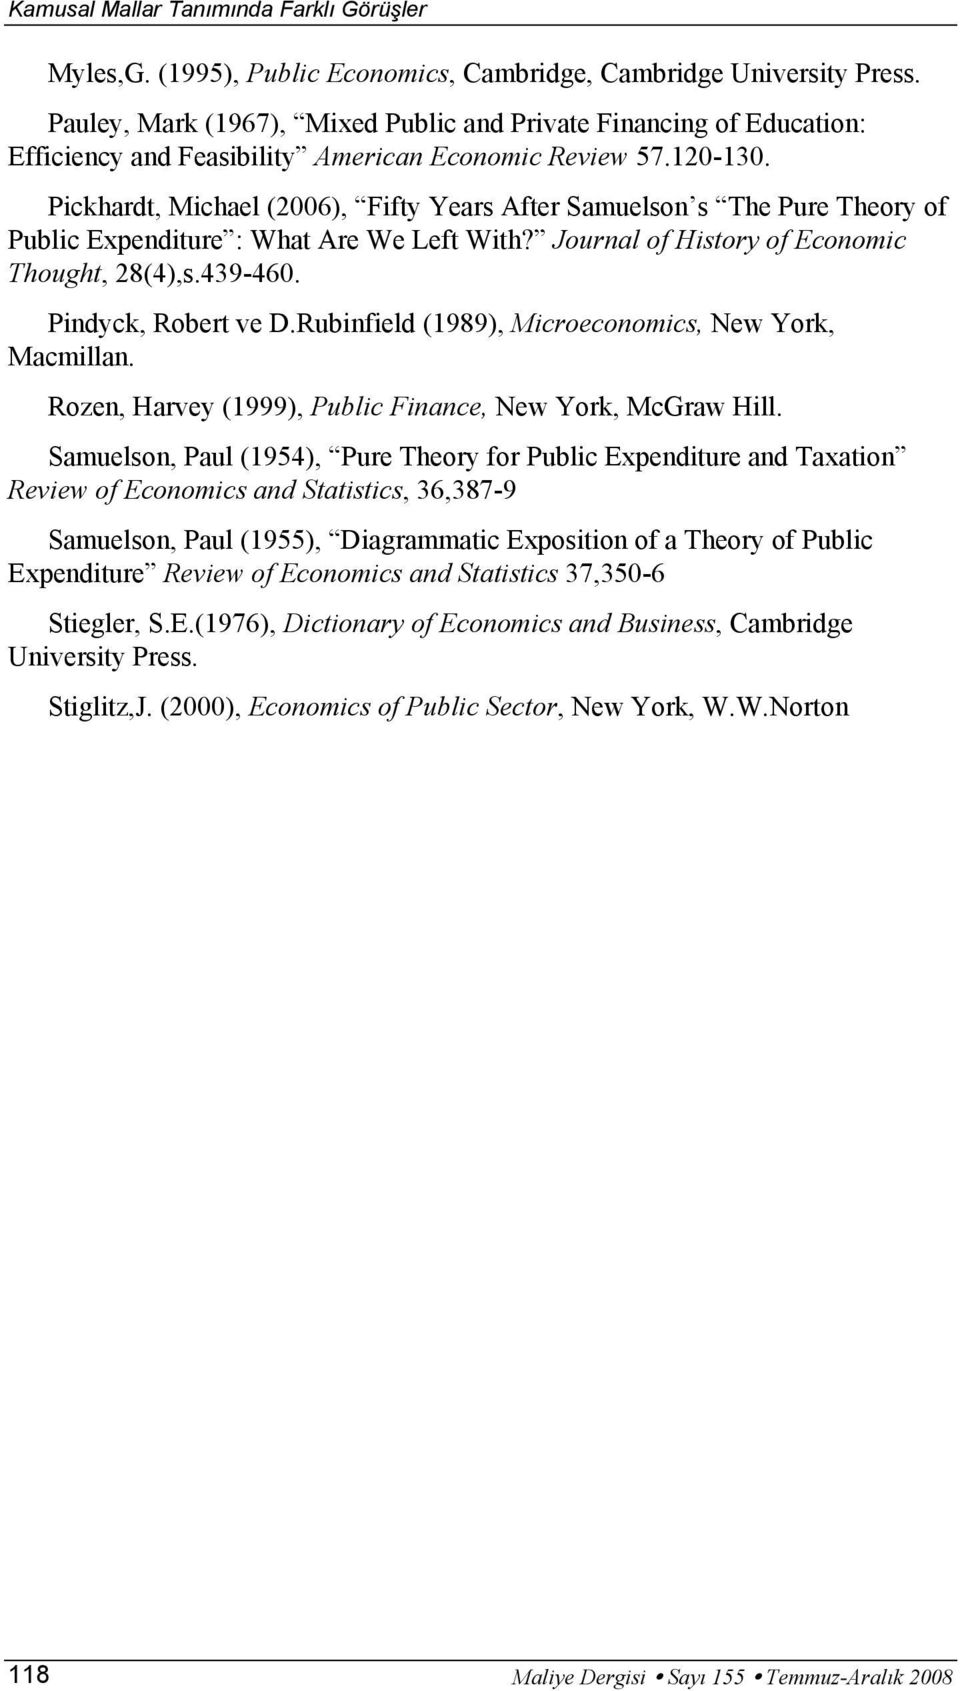 Pindyck, Robert ve D.Rubinfield (1989), Microeconomics, New York, Macmillan. Rozen, Harvey (1999), Public Finance, New York, McGraw Hill.